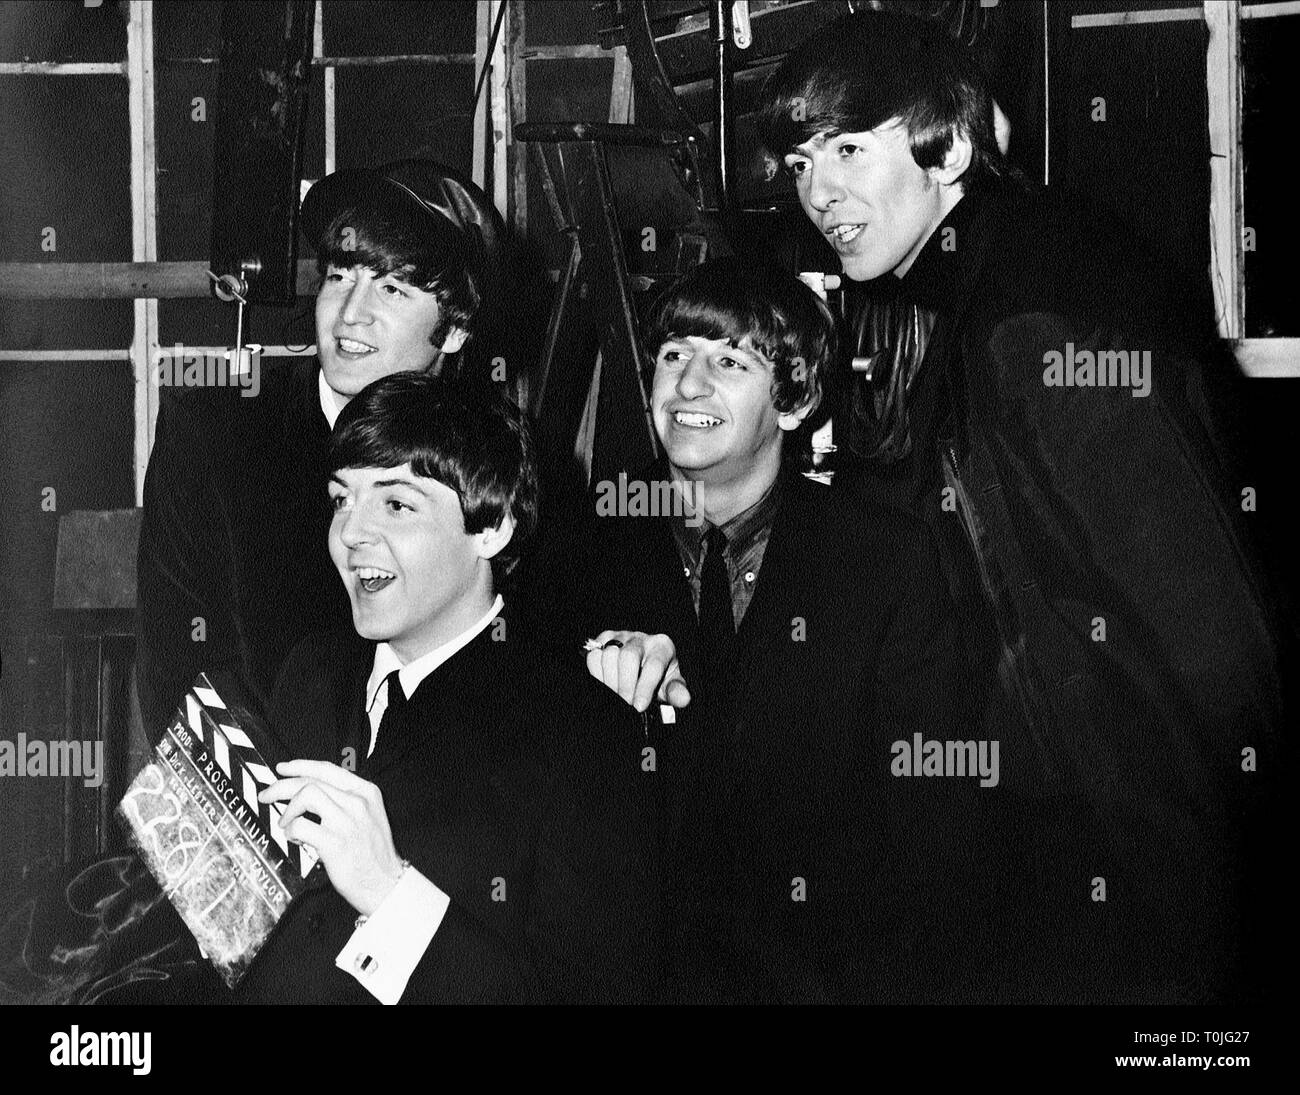 A HARD DAY'S NIGHT, JOHN LENNON, PAUL MCCARTNEY, RINGO STARR , GEORGE  HARRISON, 1964 Stock Photo - Alamy